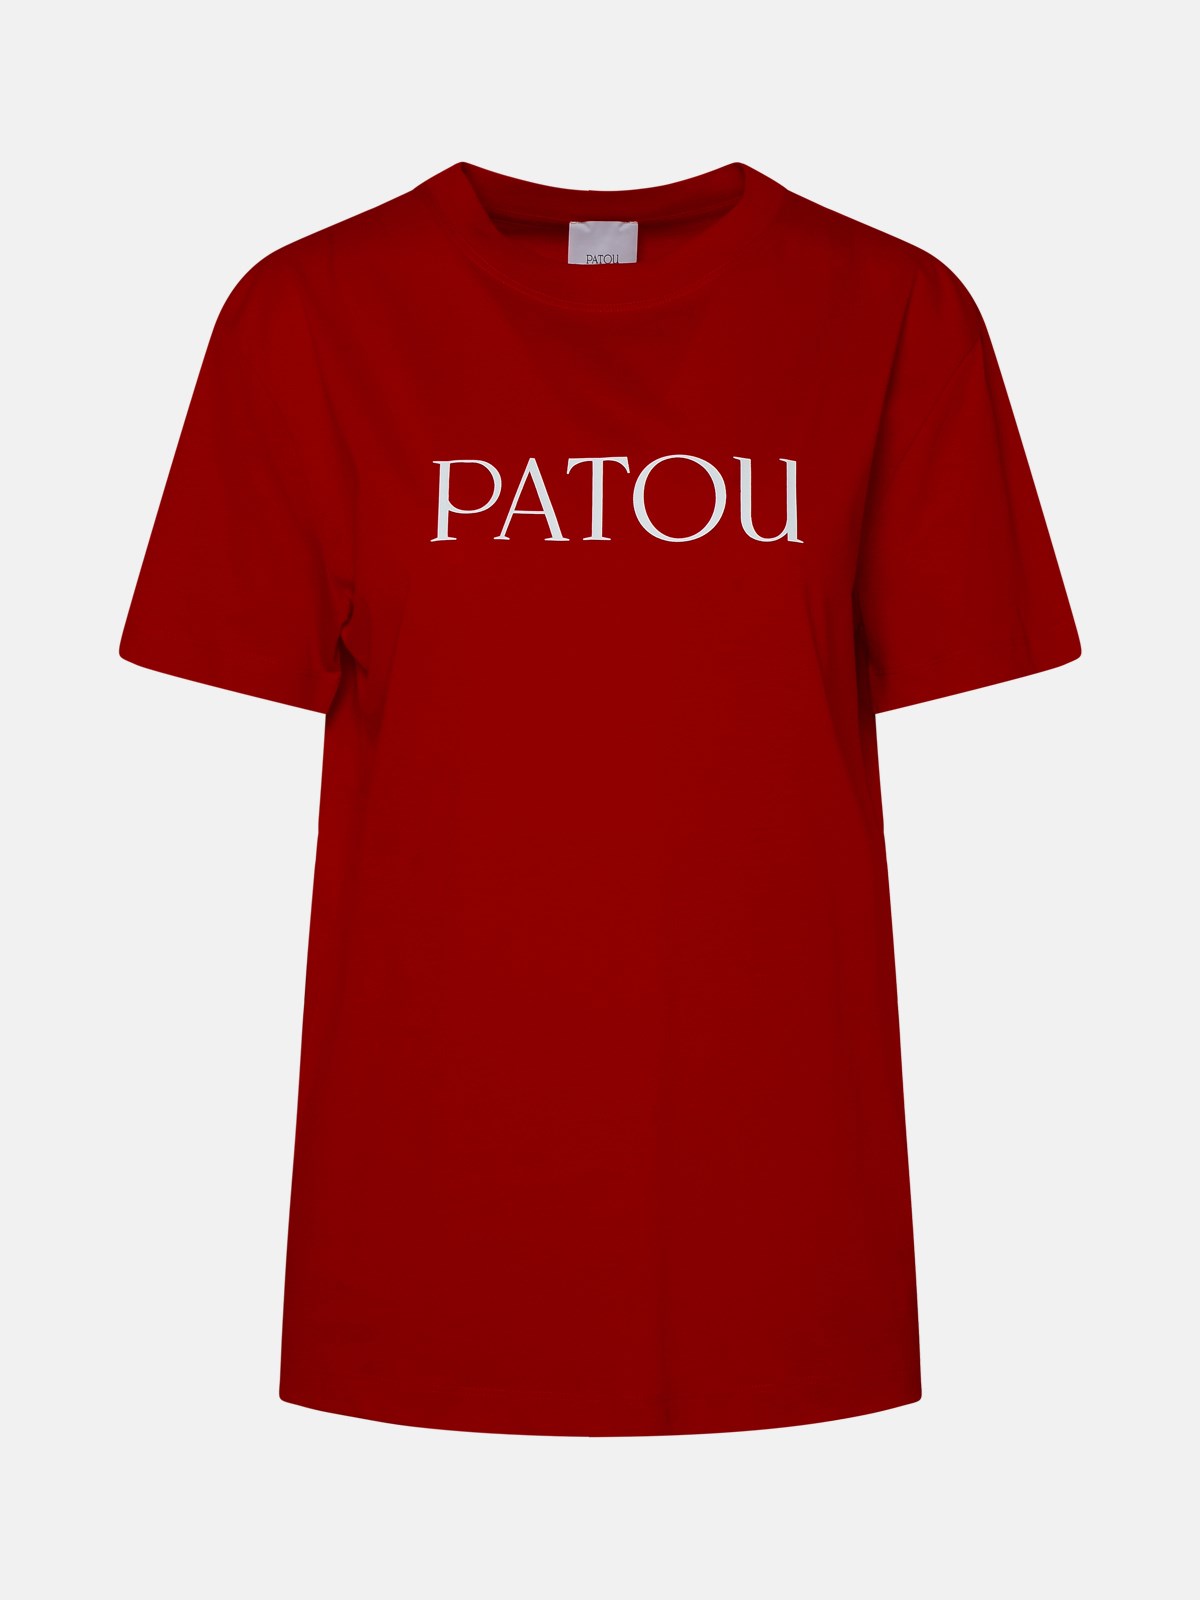 Patou Red Cotton T-shirt